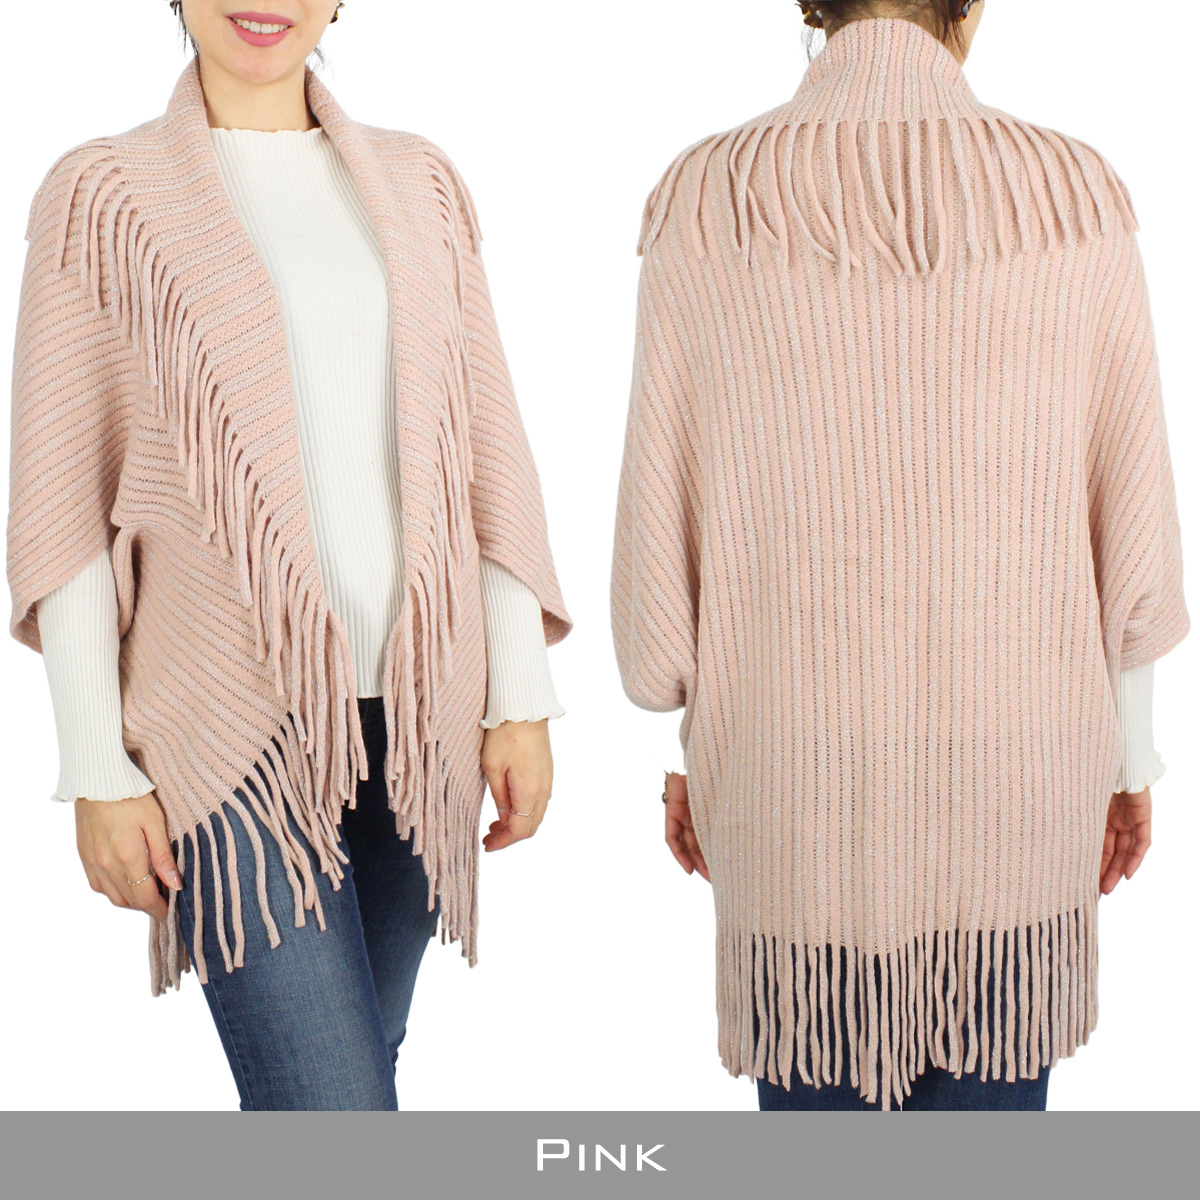 10064 - Pink<br>
Lurex Knit Vest